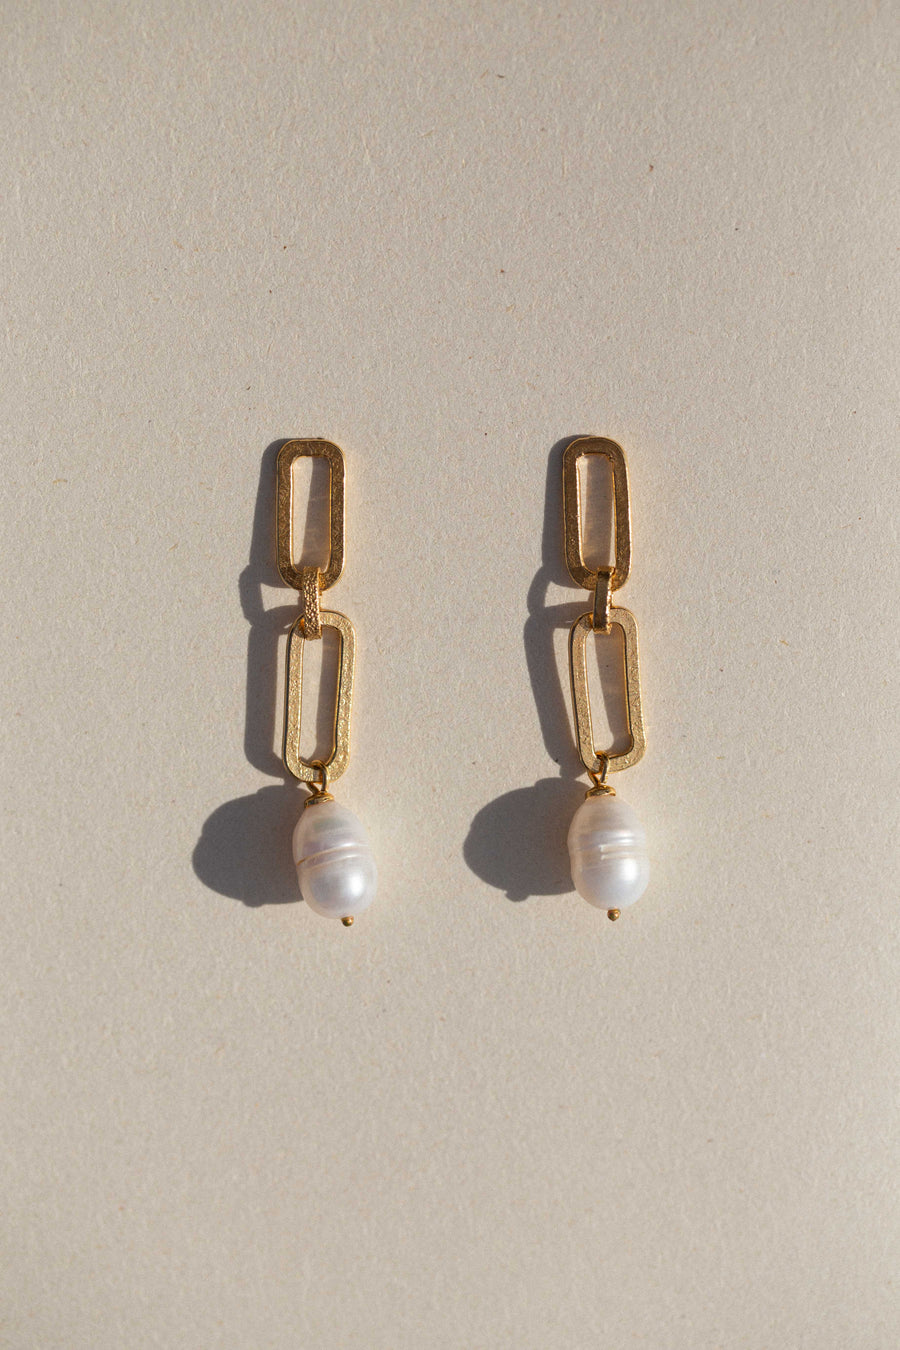 SAMSA Golden Chain Earrings with Pearl